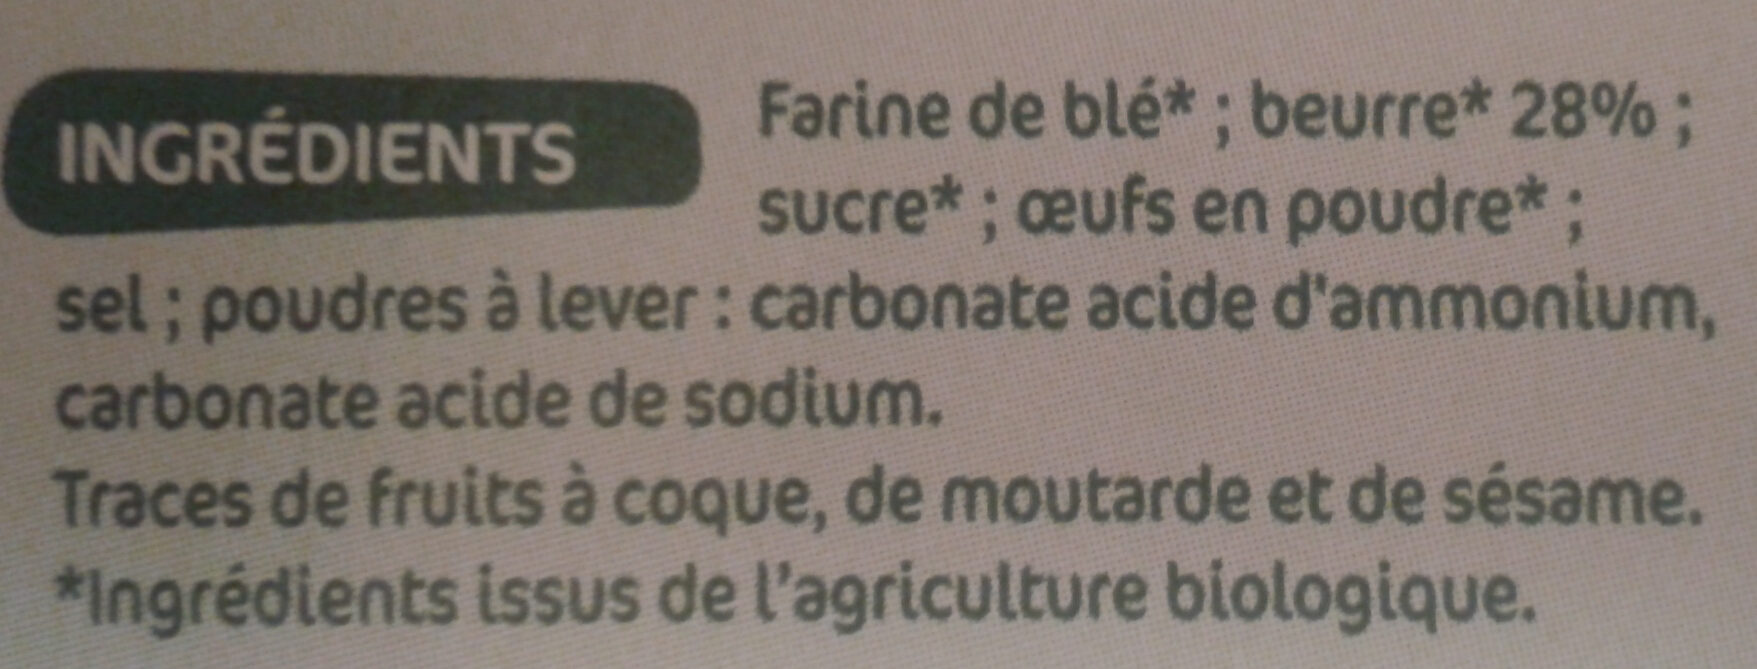 Galette pur beurre - Ingredientes - fr